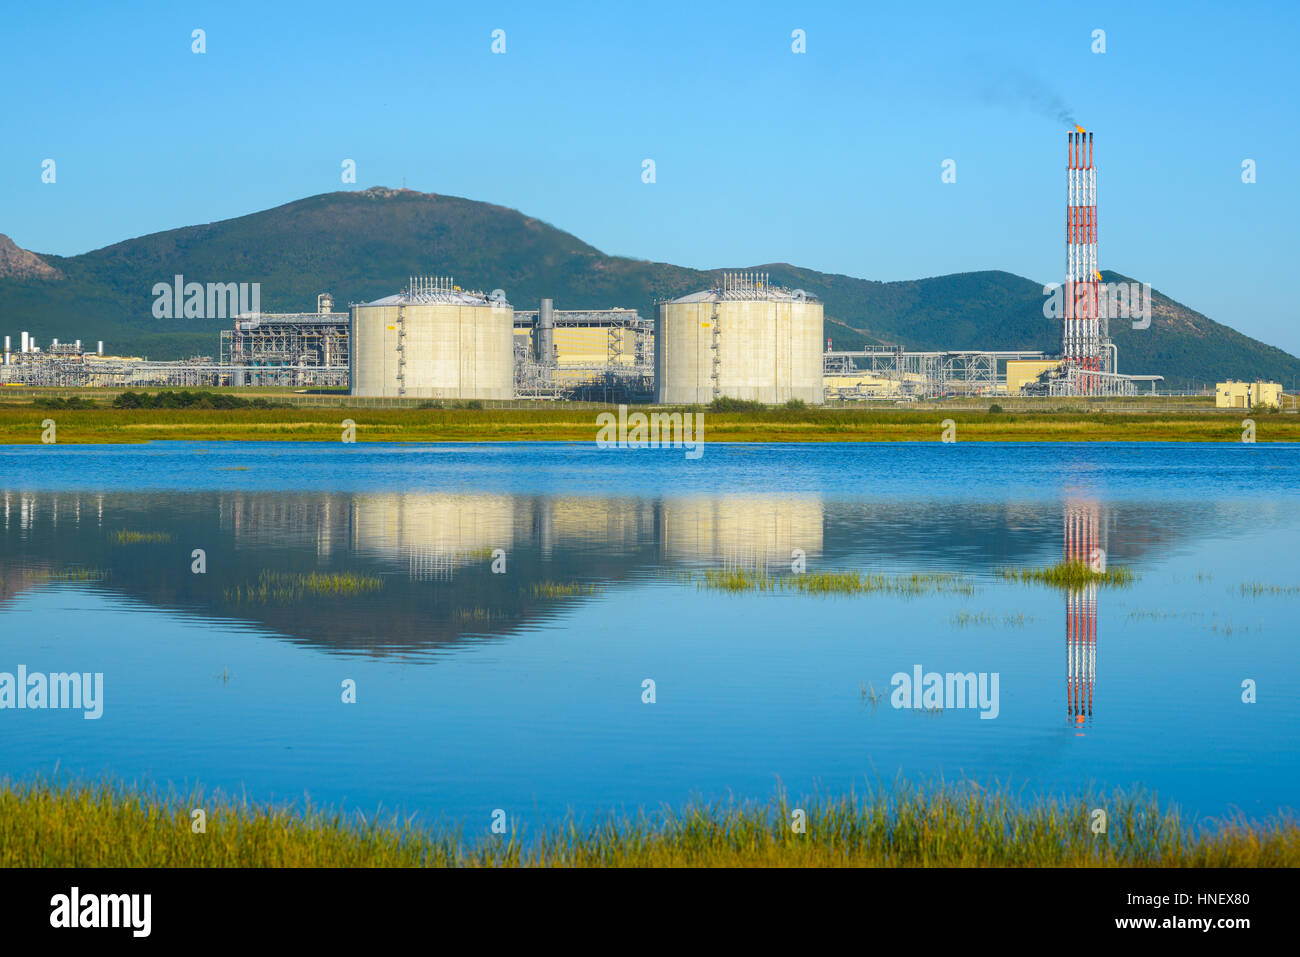 LNG plant, Sakhalin island, Russia Stock Photo